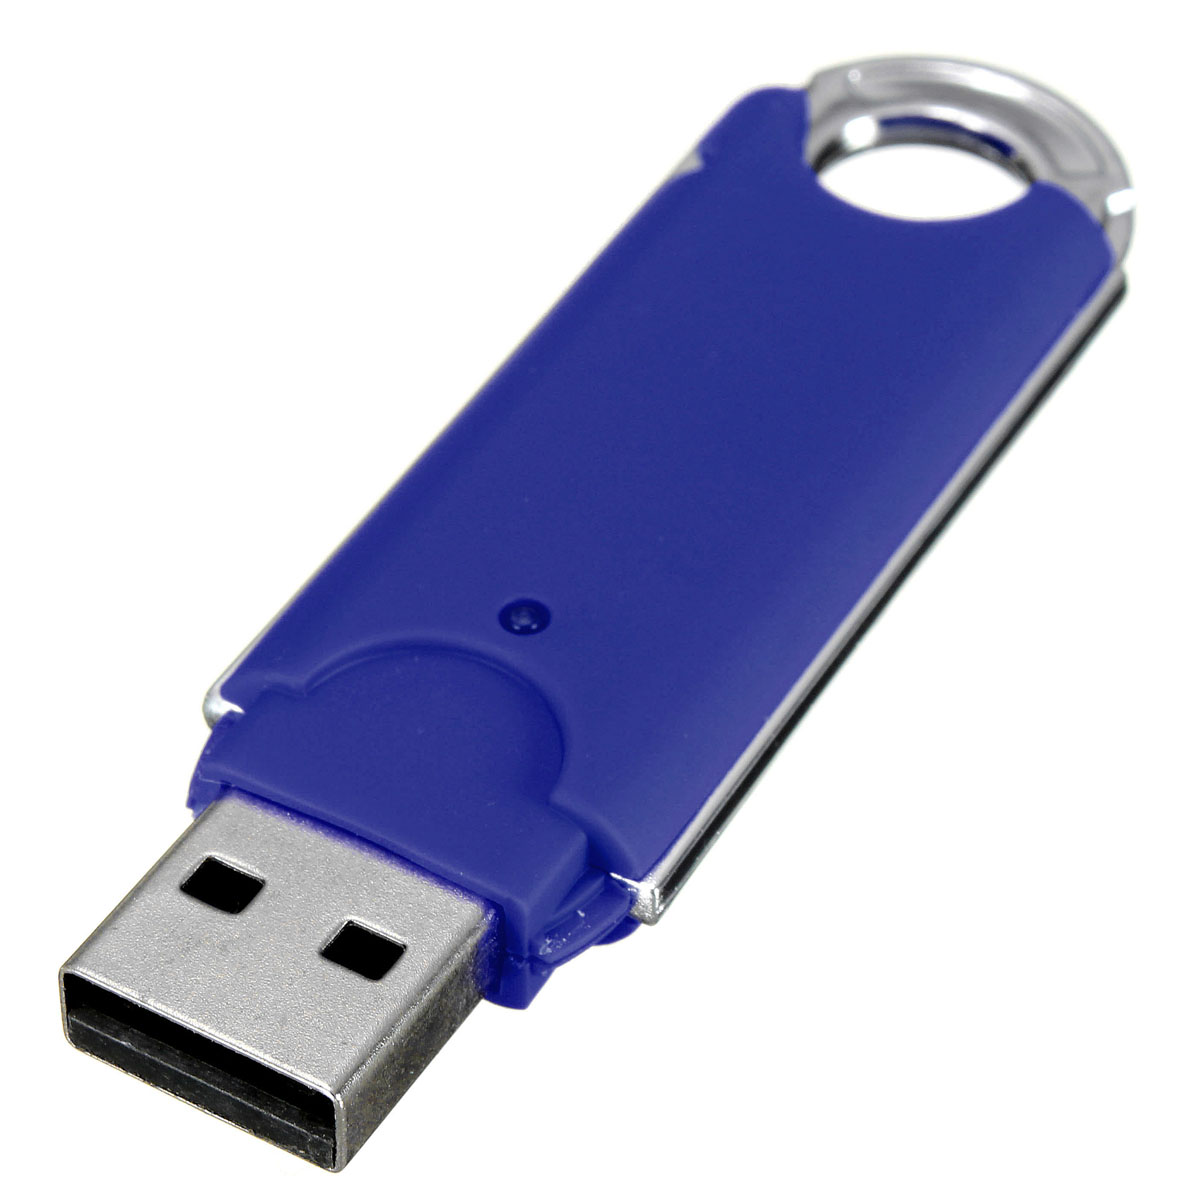 Bestrunner 16GB USB 2.0 Key Chain Model Flash Memory Stick Pen Drive Storage Thumb U Disk